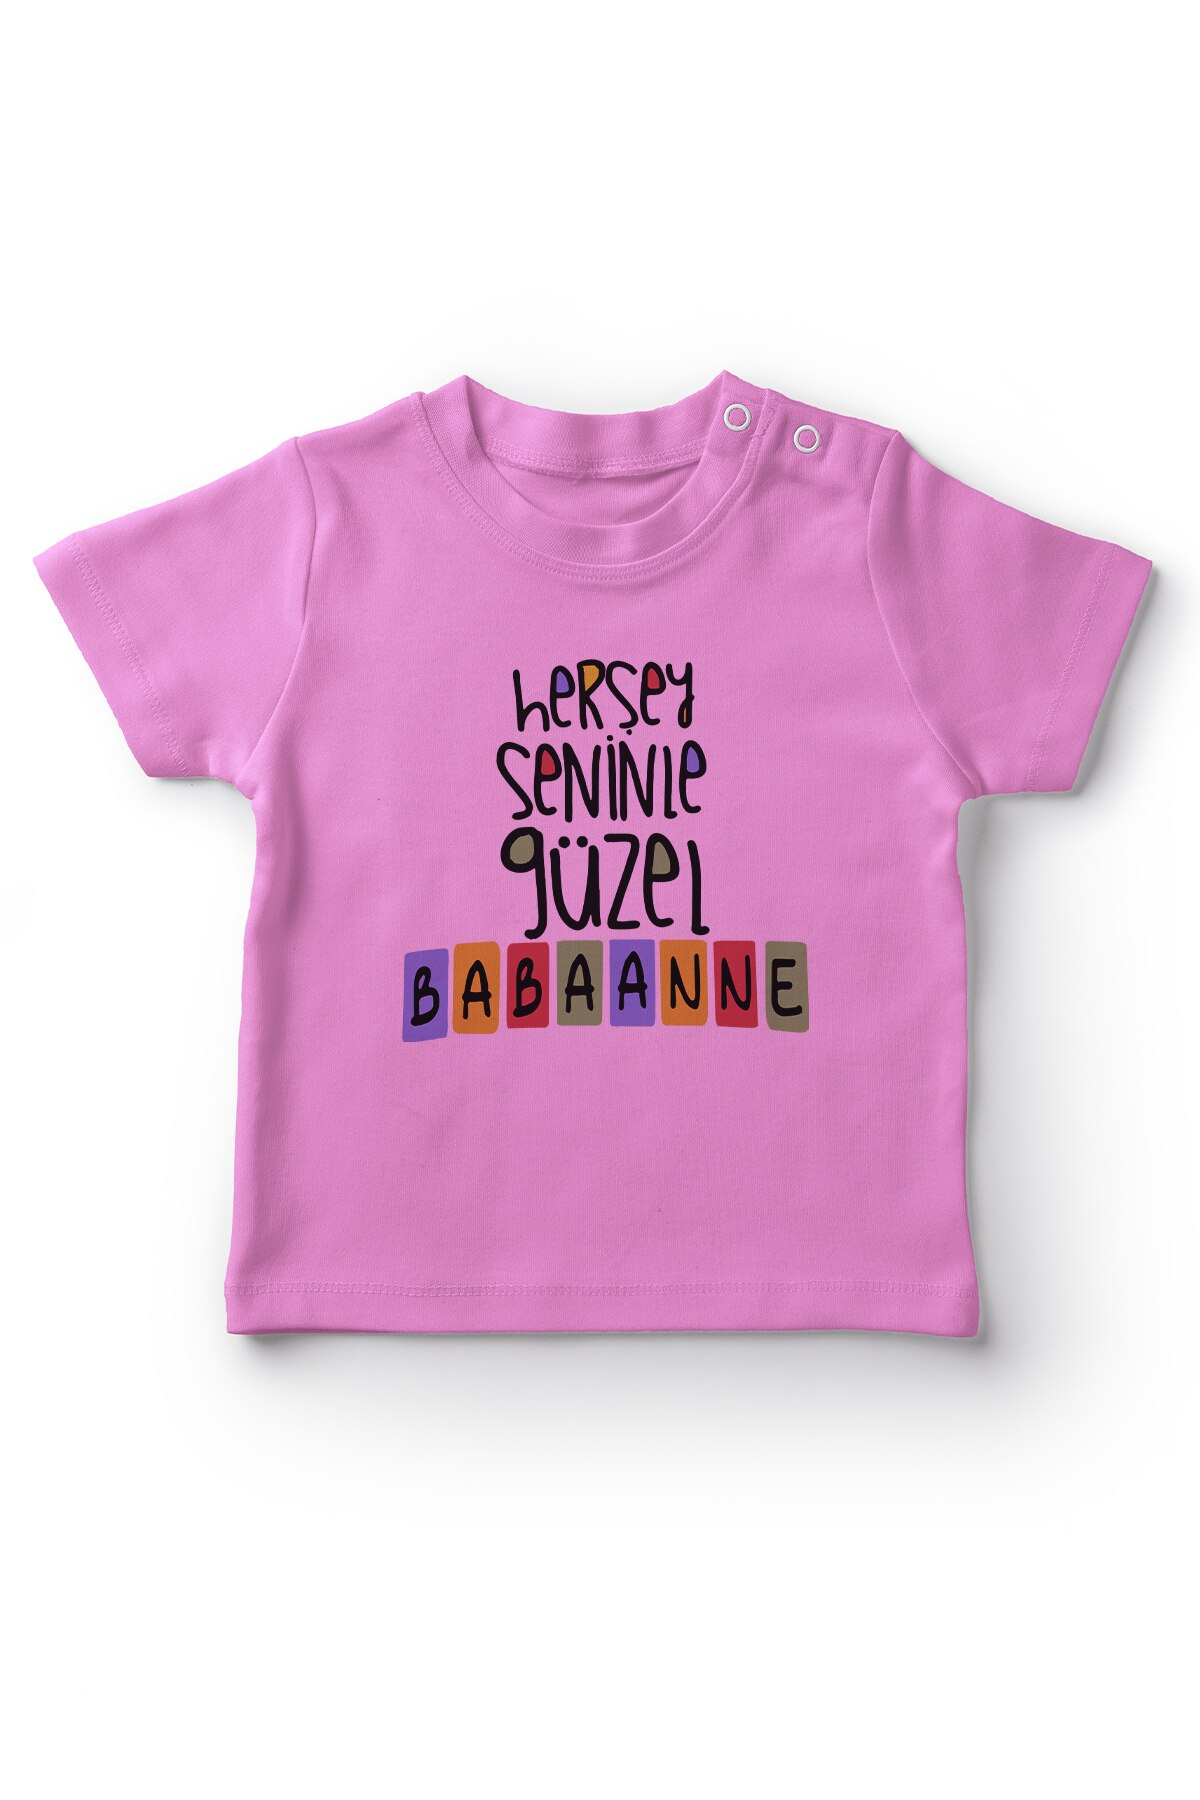 Angemiel Baby Alles Met Je Mooie Bababanne Meisje Baby T-shirt Roze